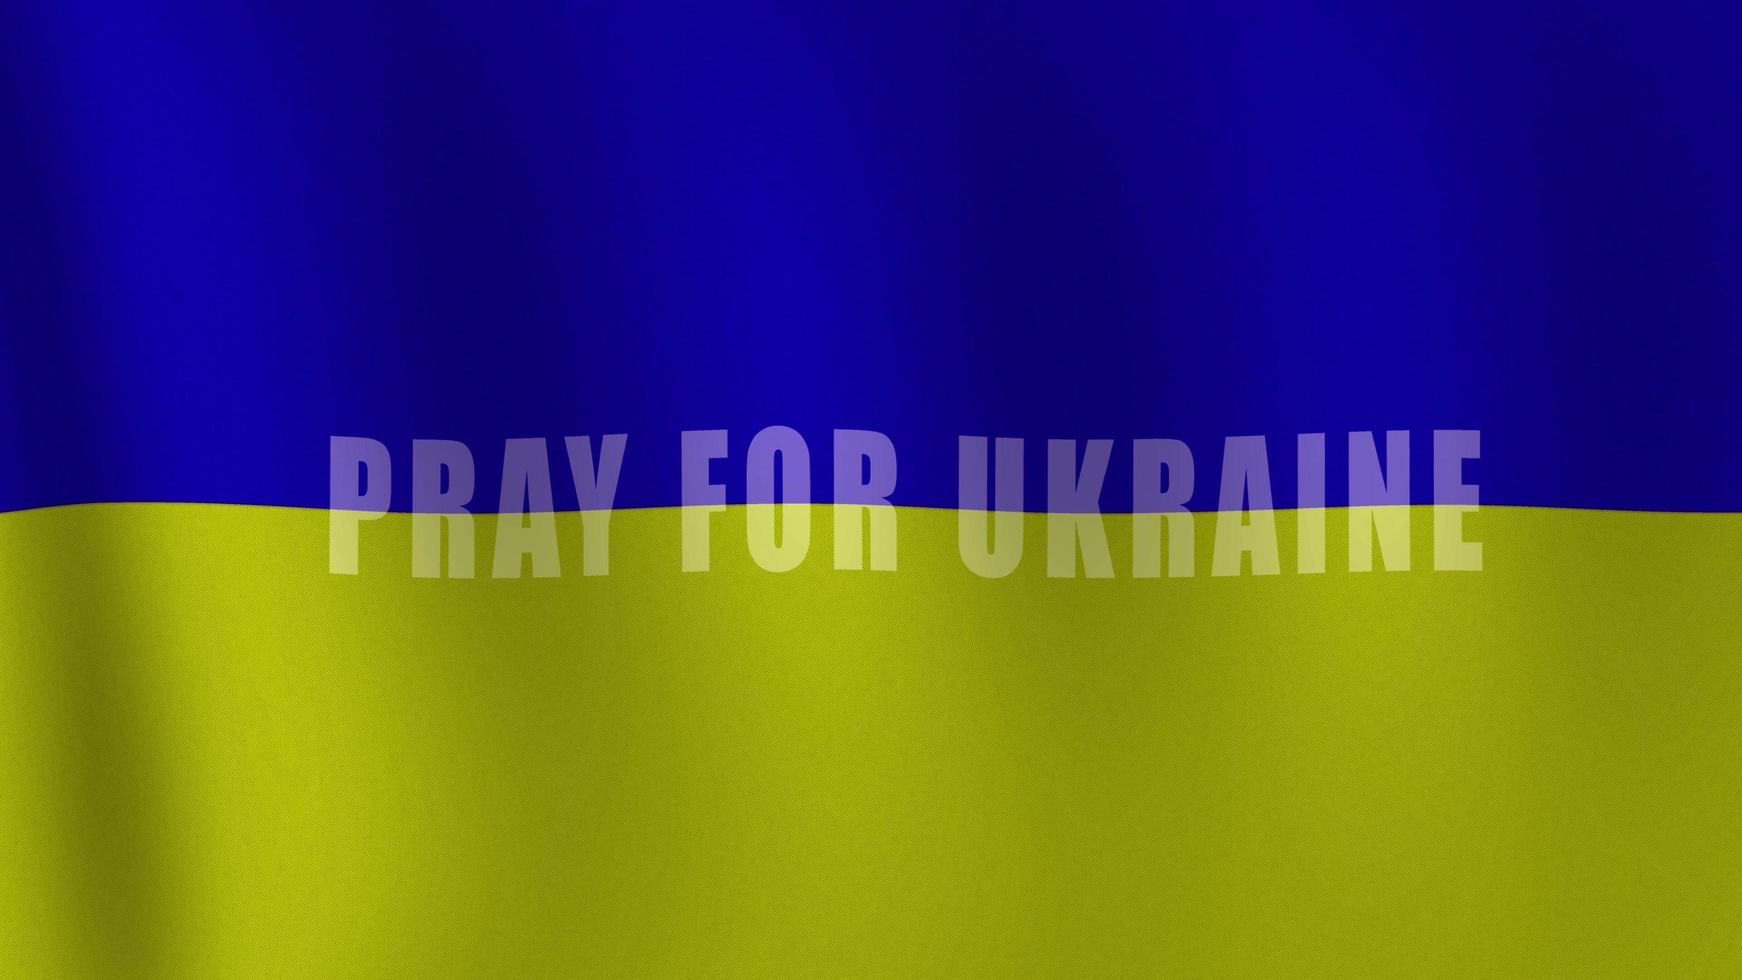 animatie gele en blauwe vlag van oekraïne. nationaal symbool van de staat oekraïne 4k foto